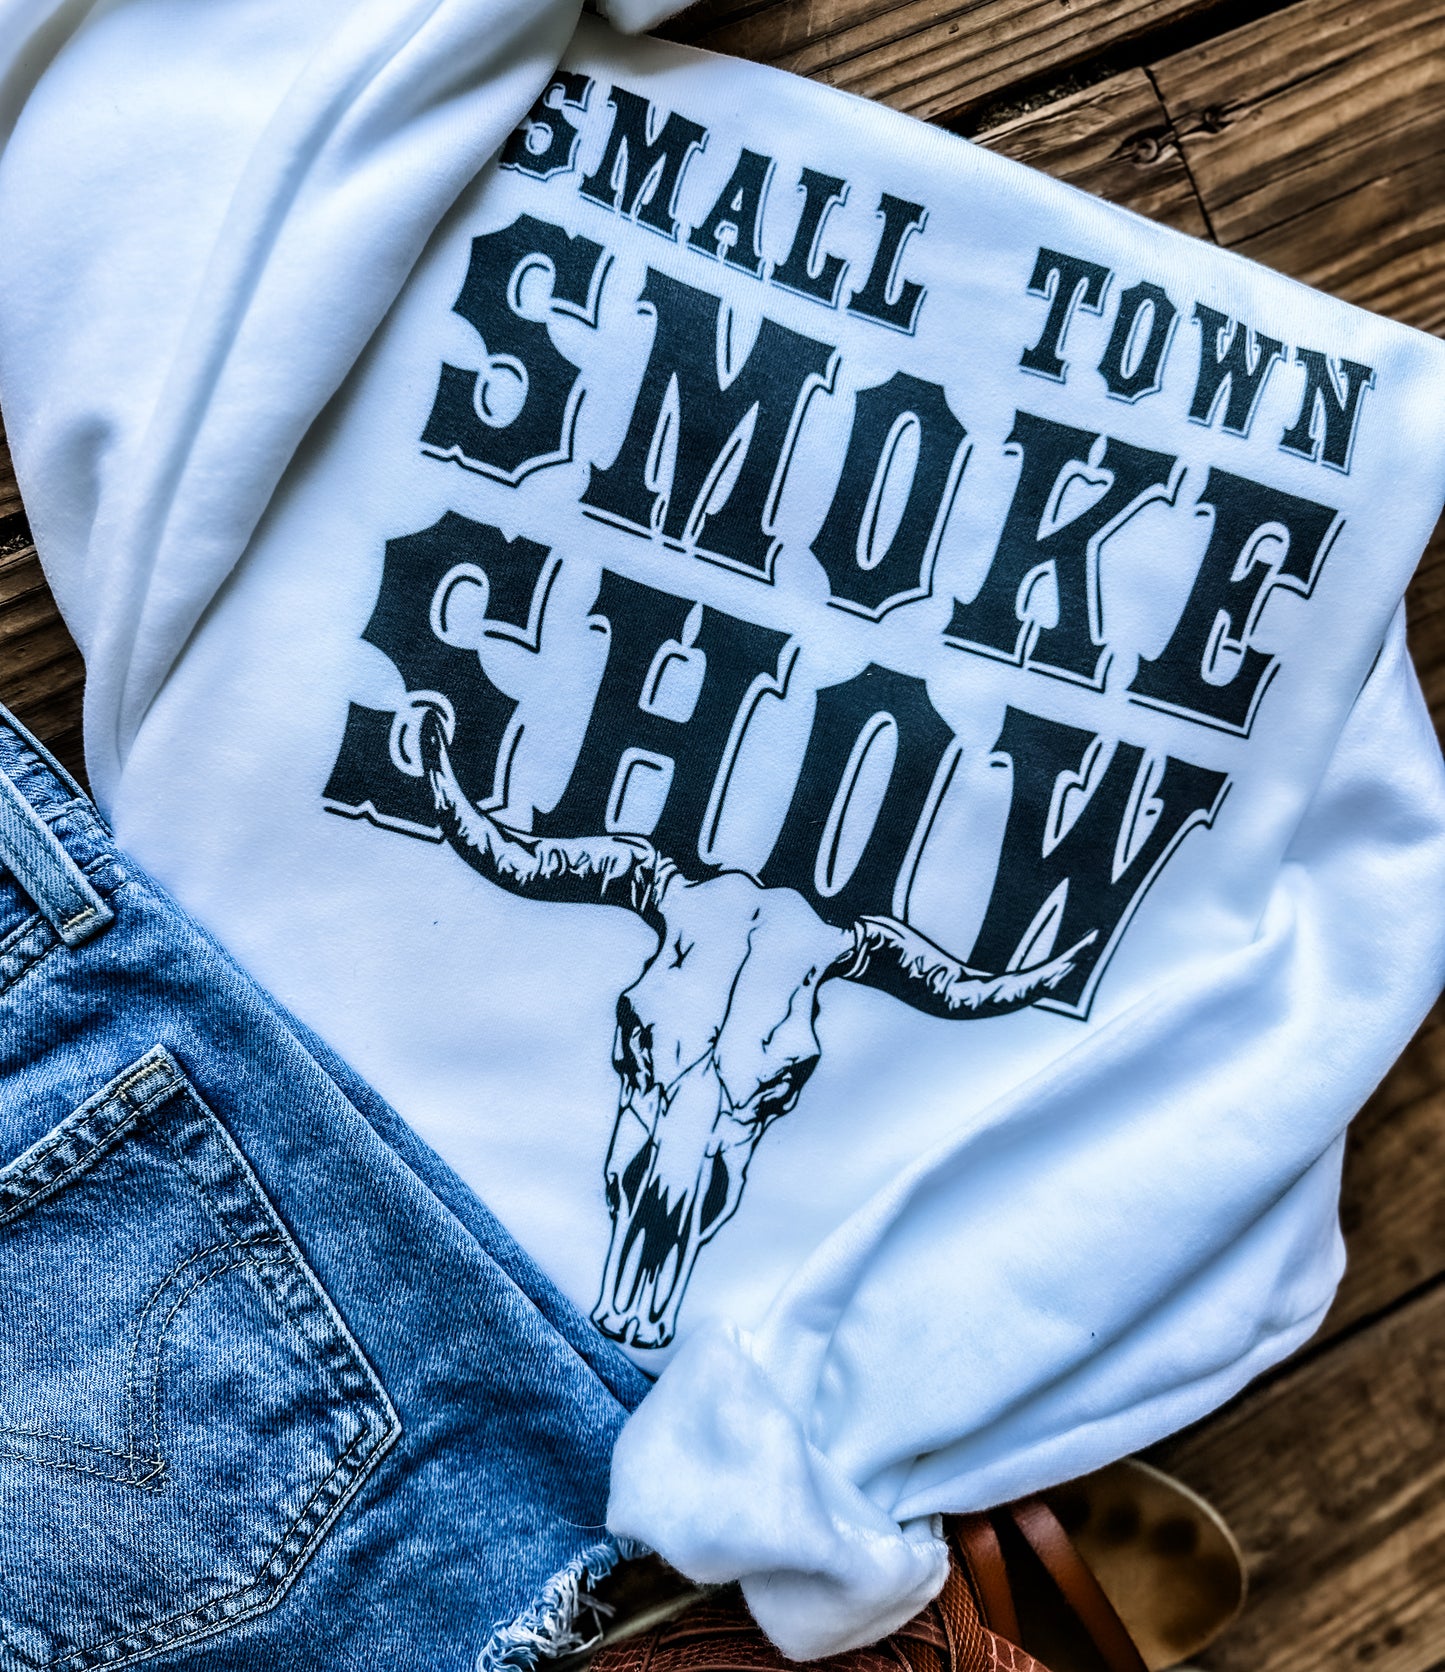 Small Town Smoke Show